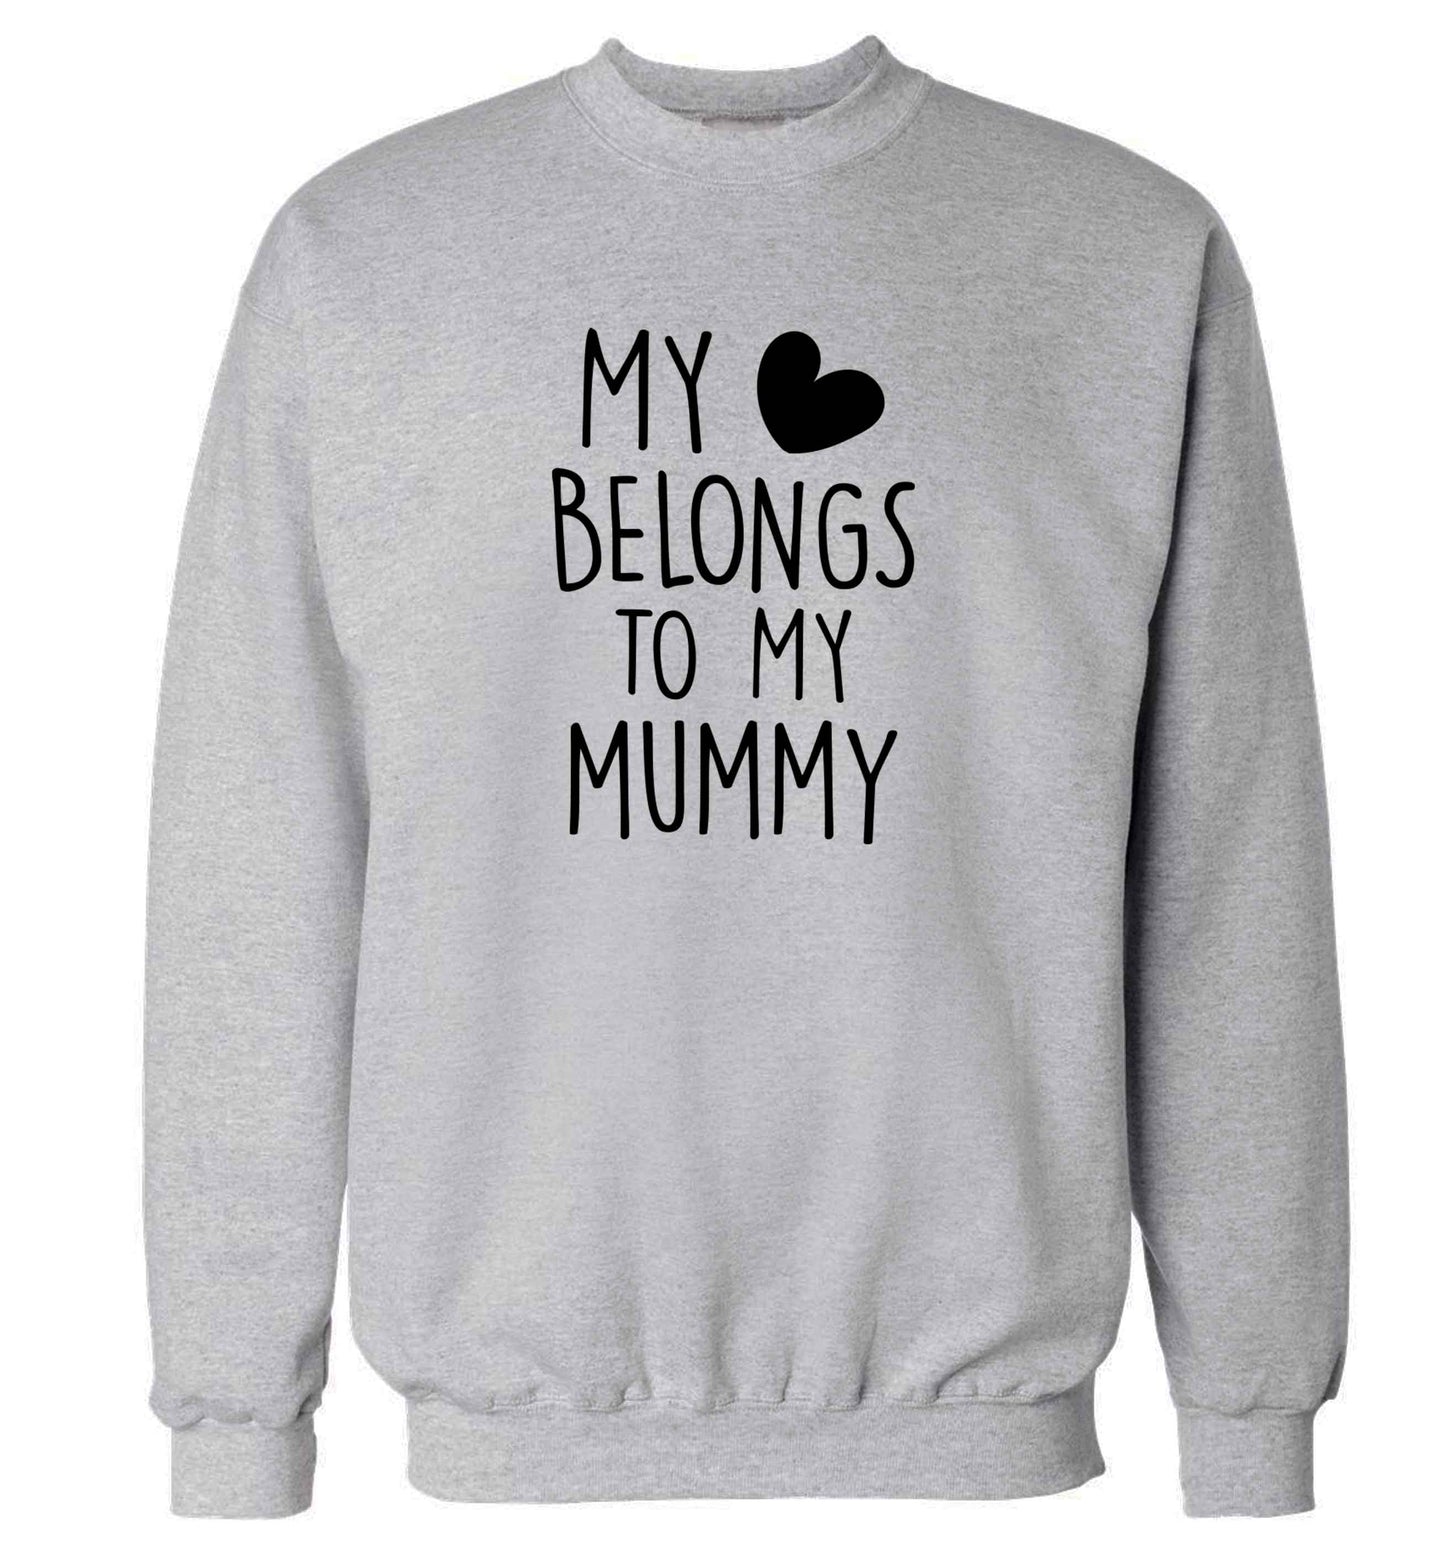 My heart belongs to my mummy adult's unisex grey sweater 2XL